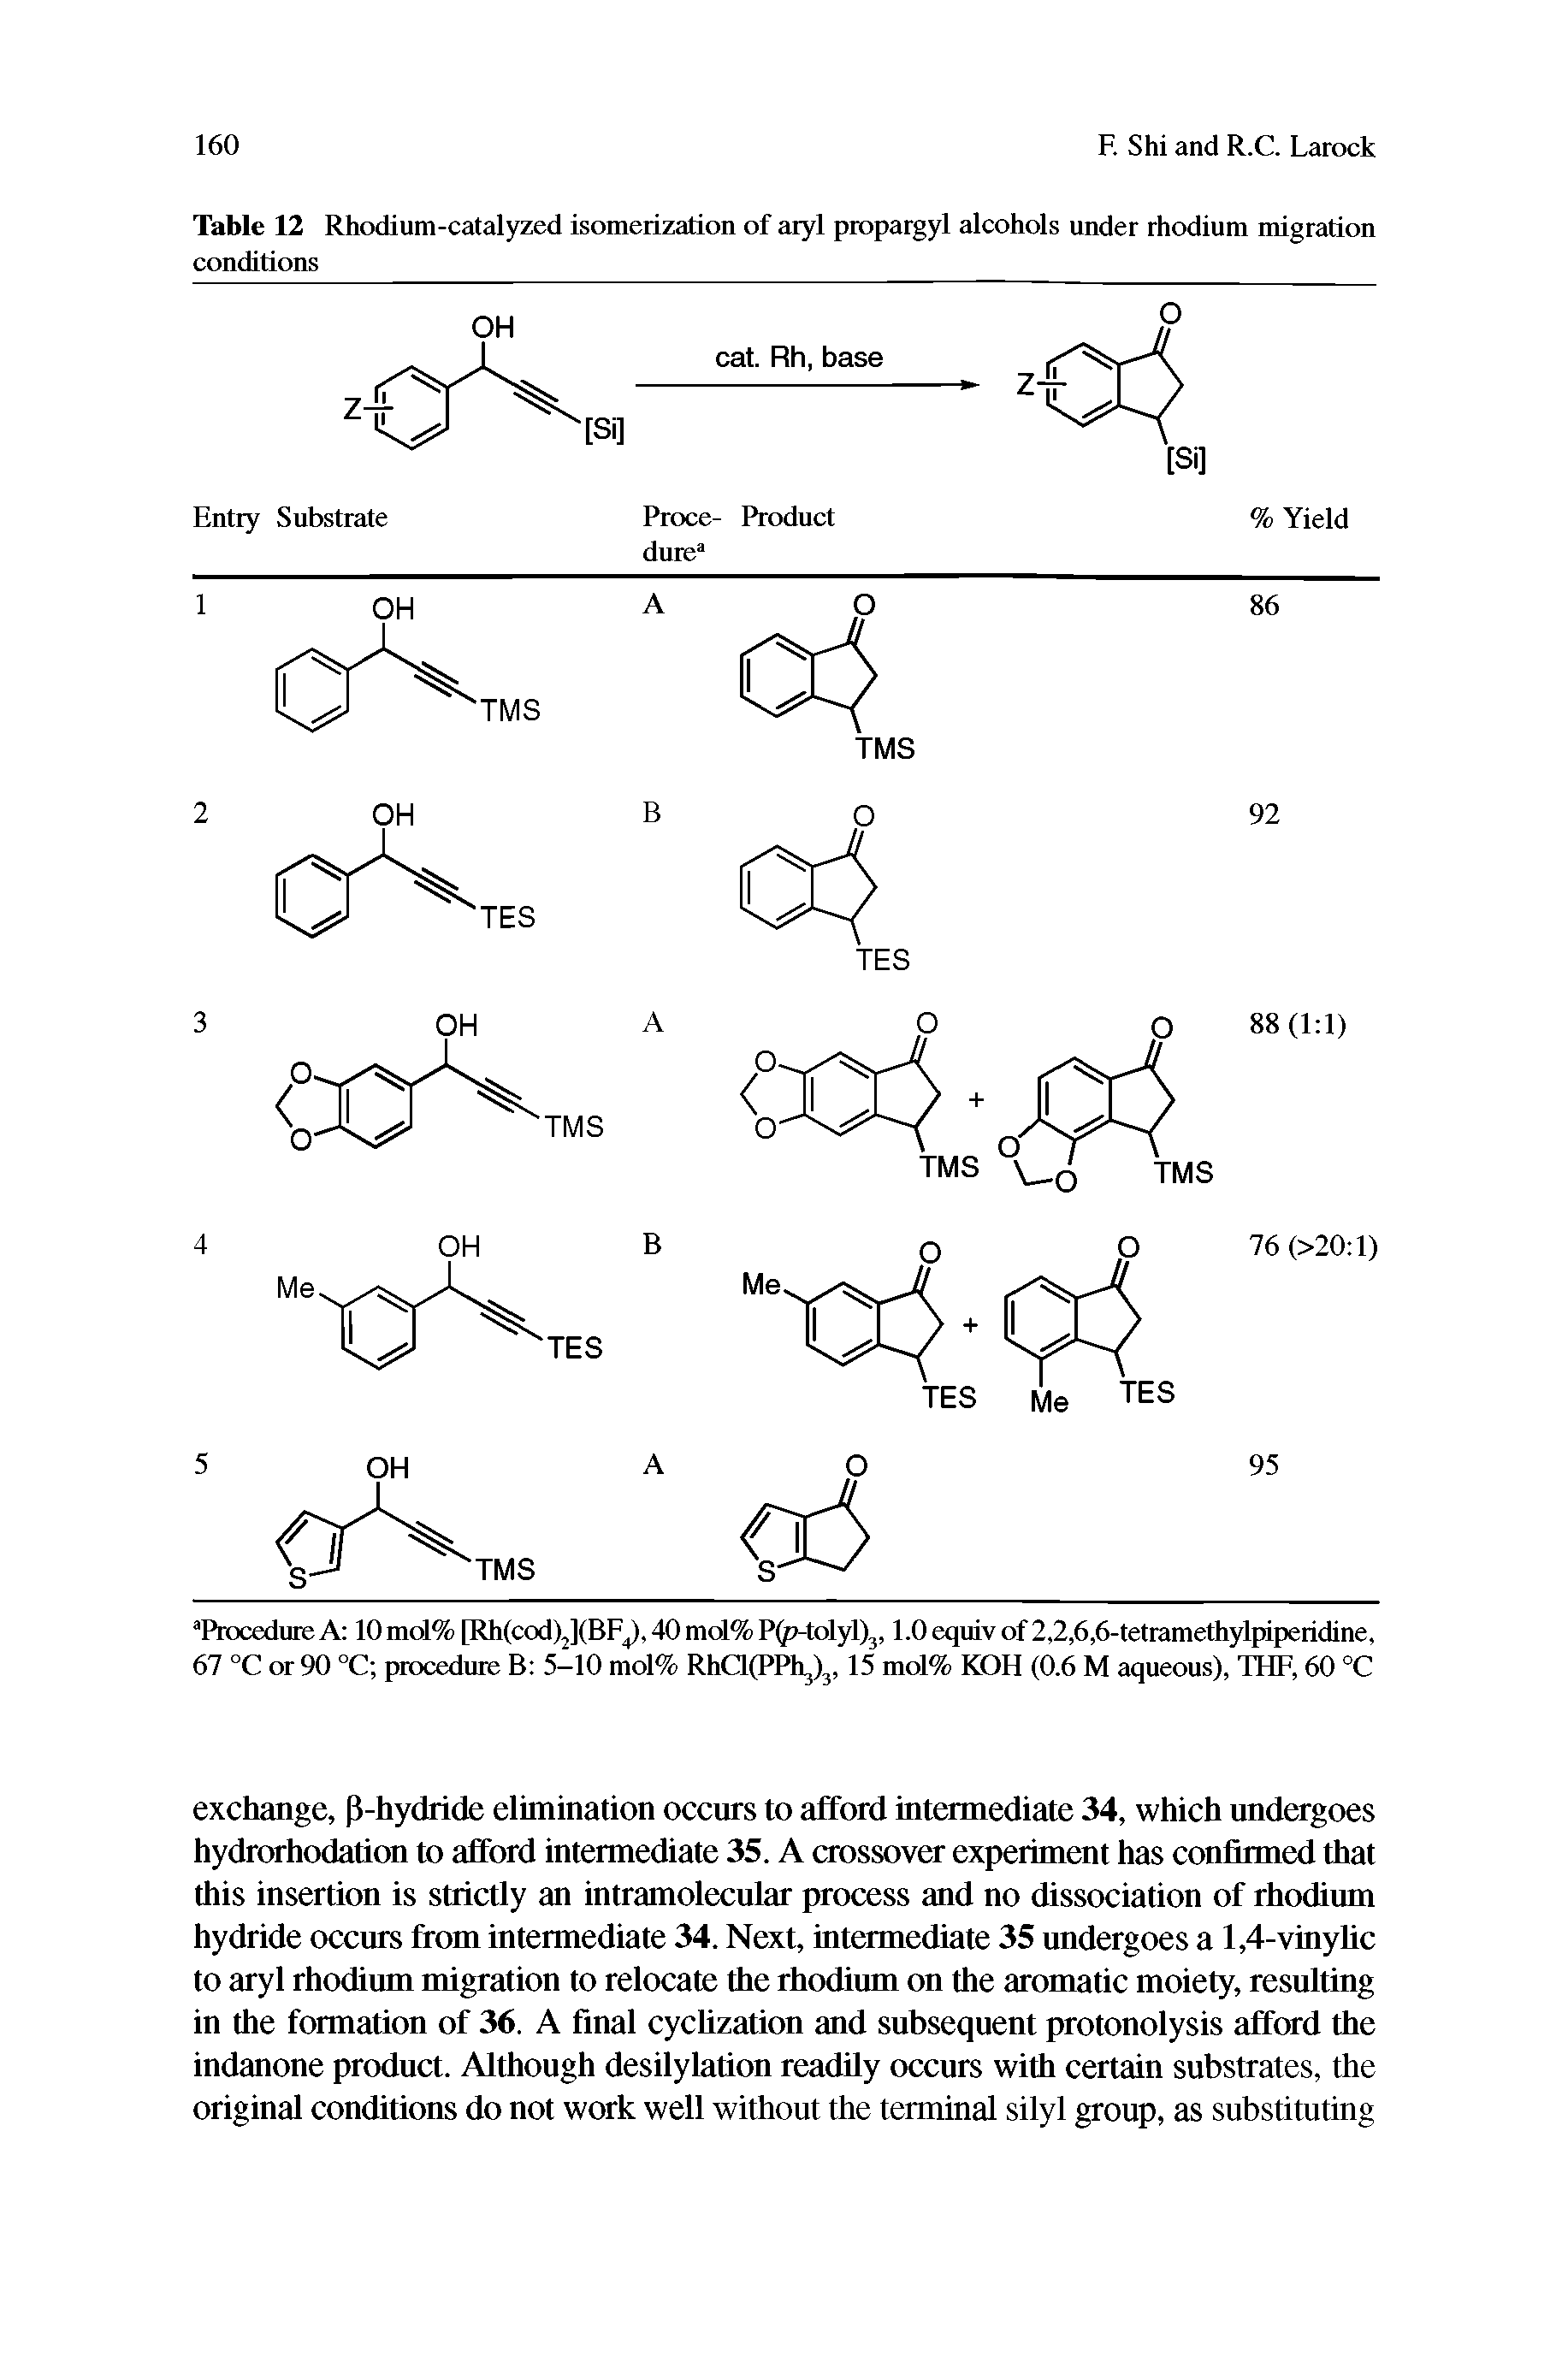 Table 12 Rhodium-catalyzed isomerization of aryl propargyl alcohols under rhodium migration conditions...